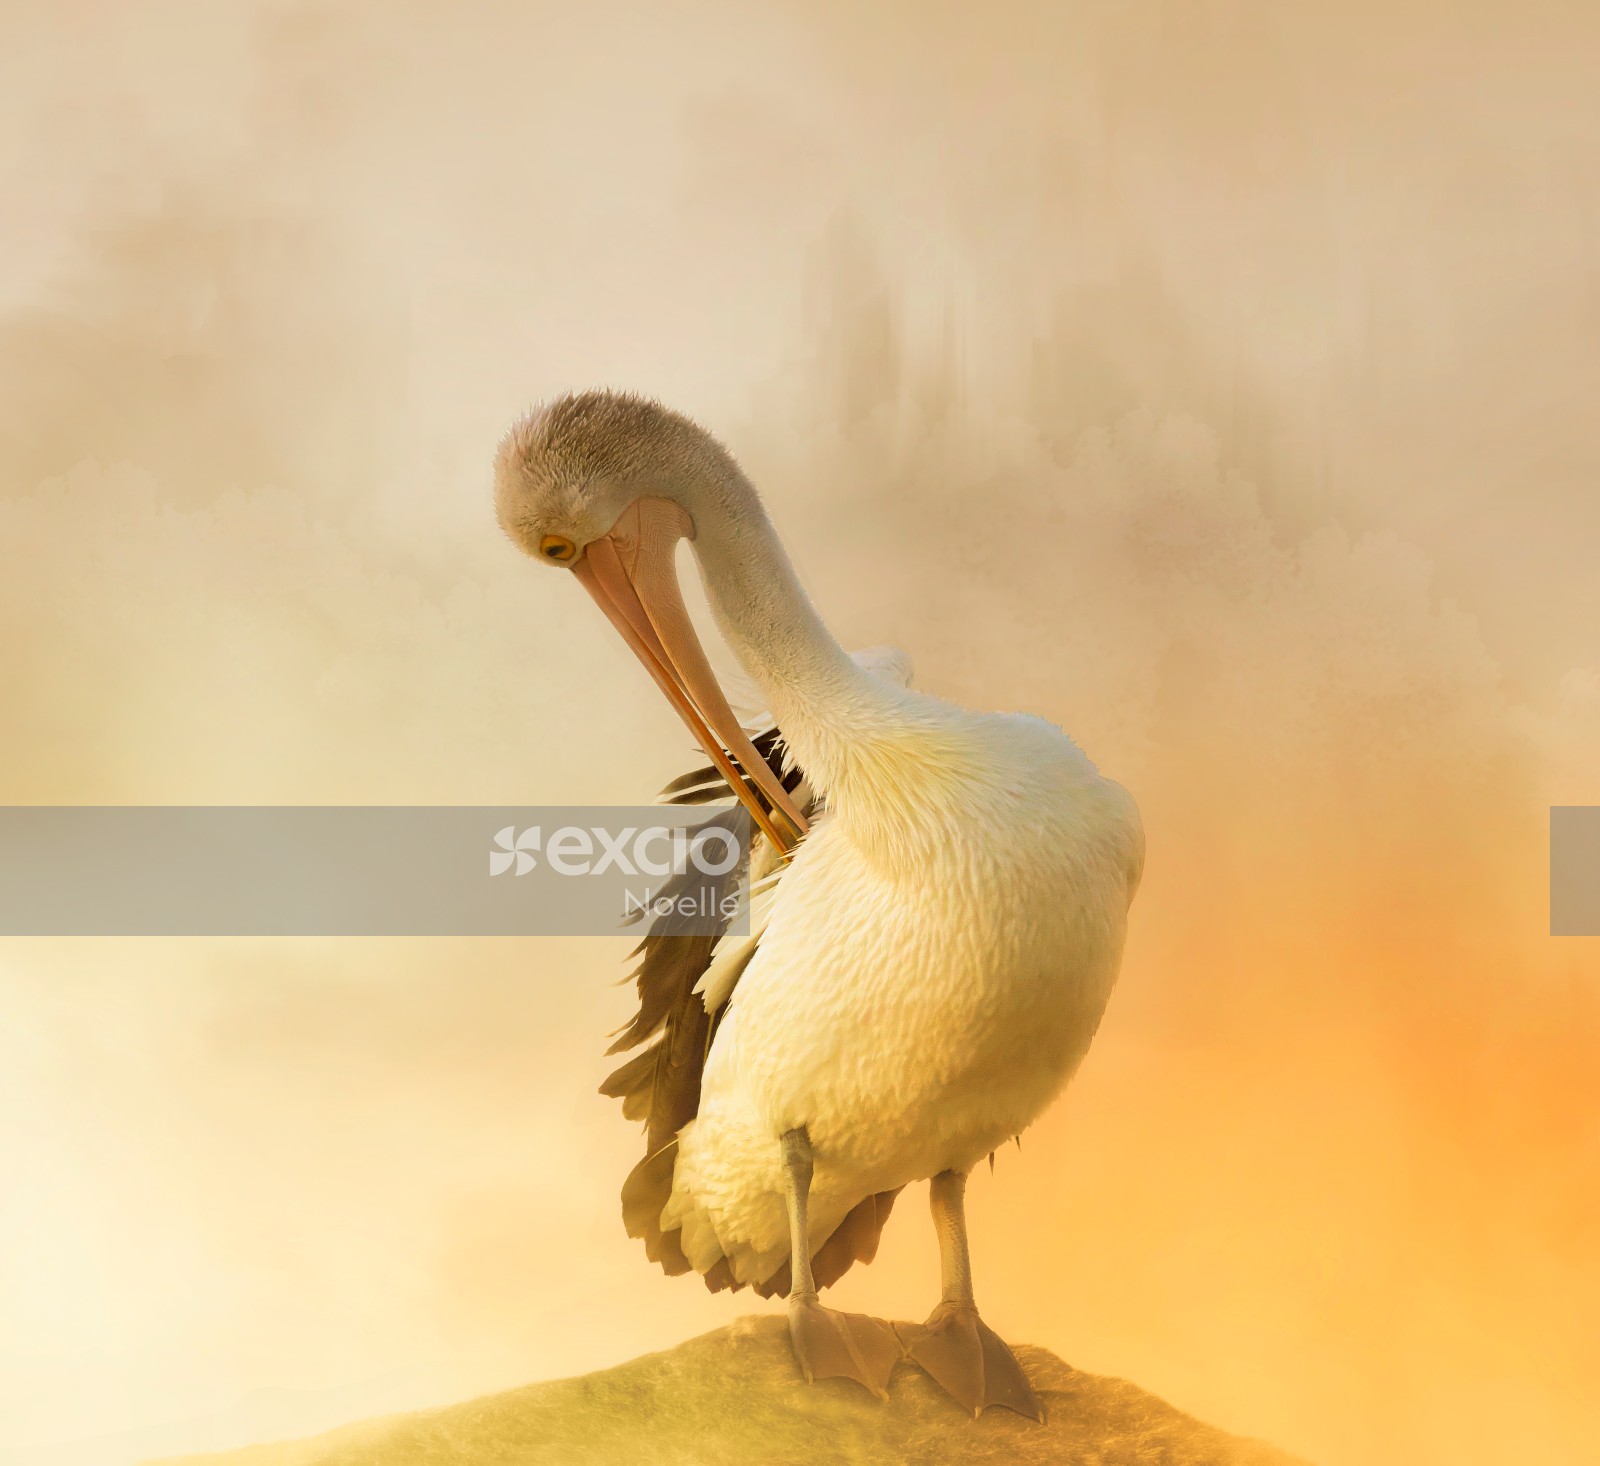 A wonderful bird is a pelican...